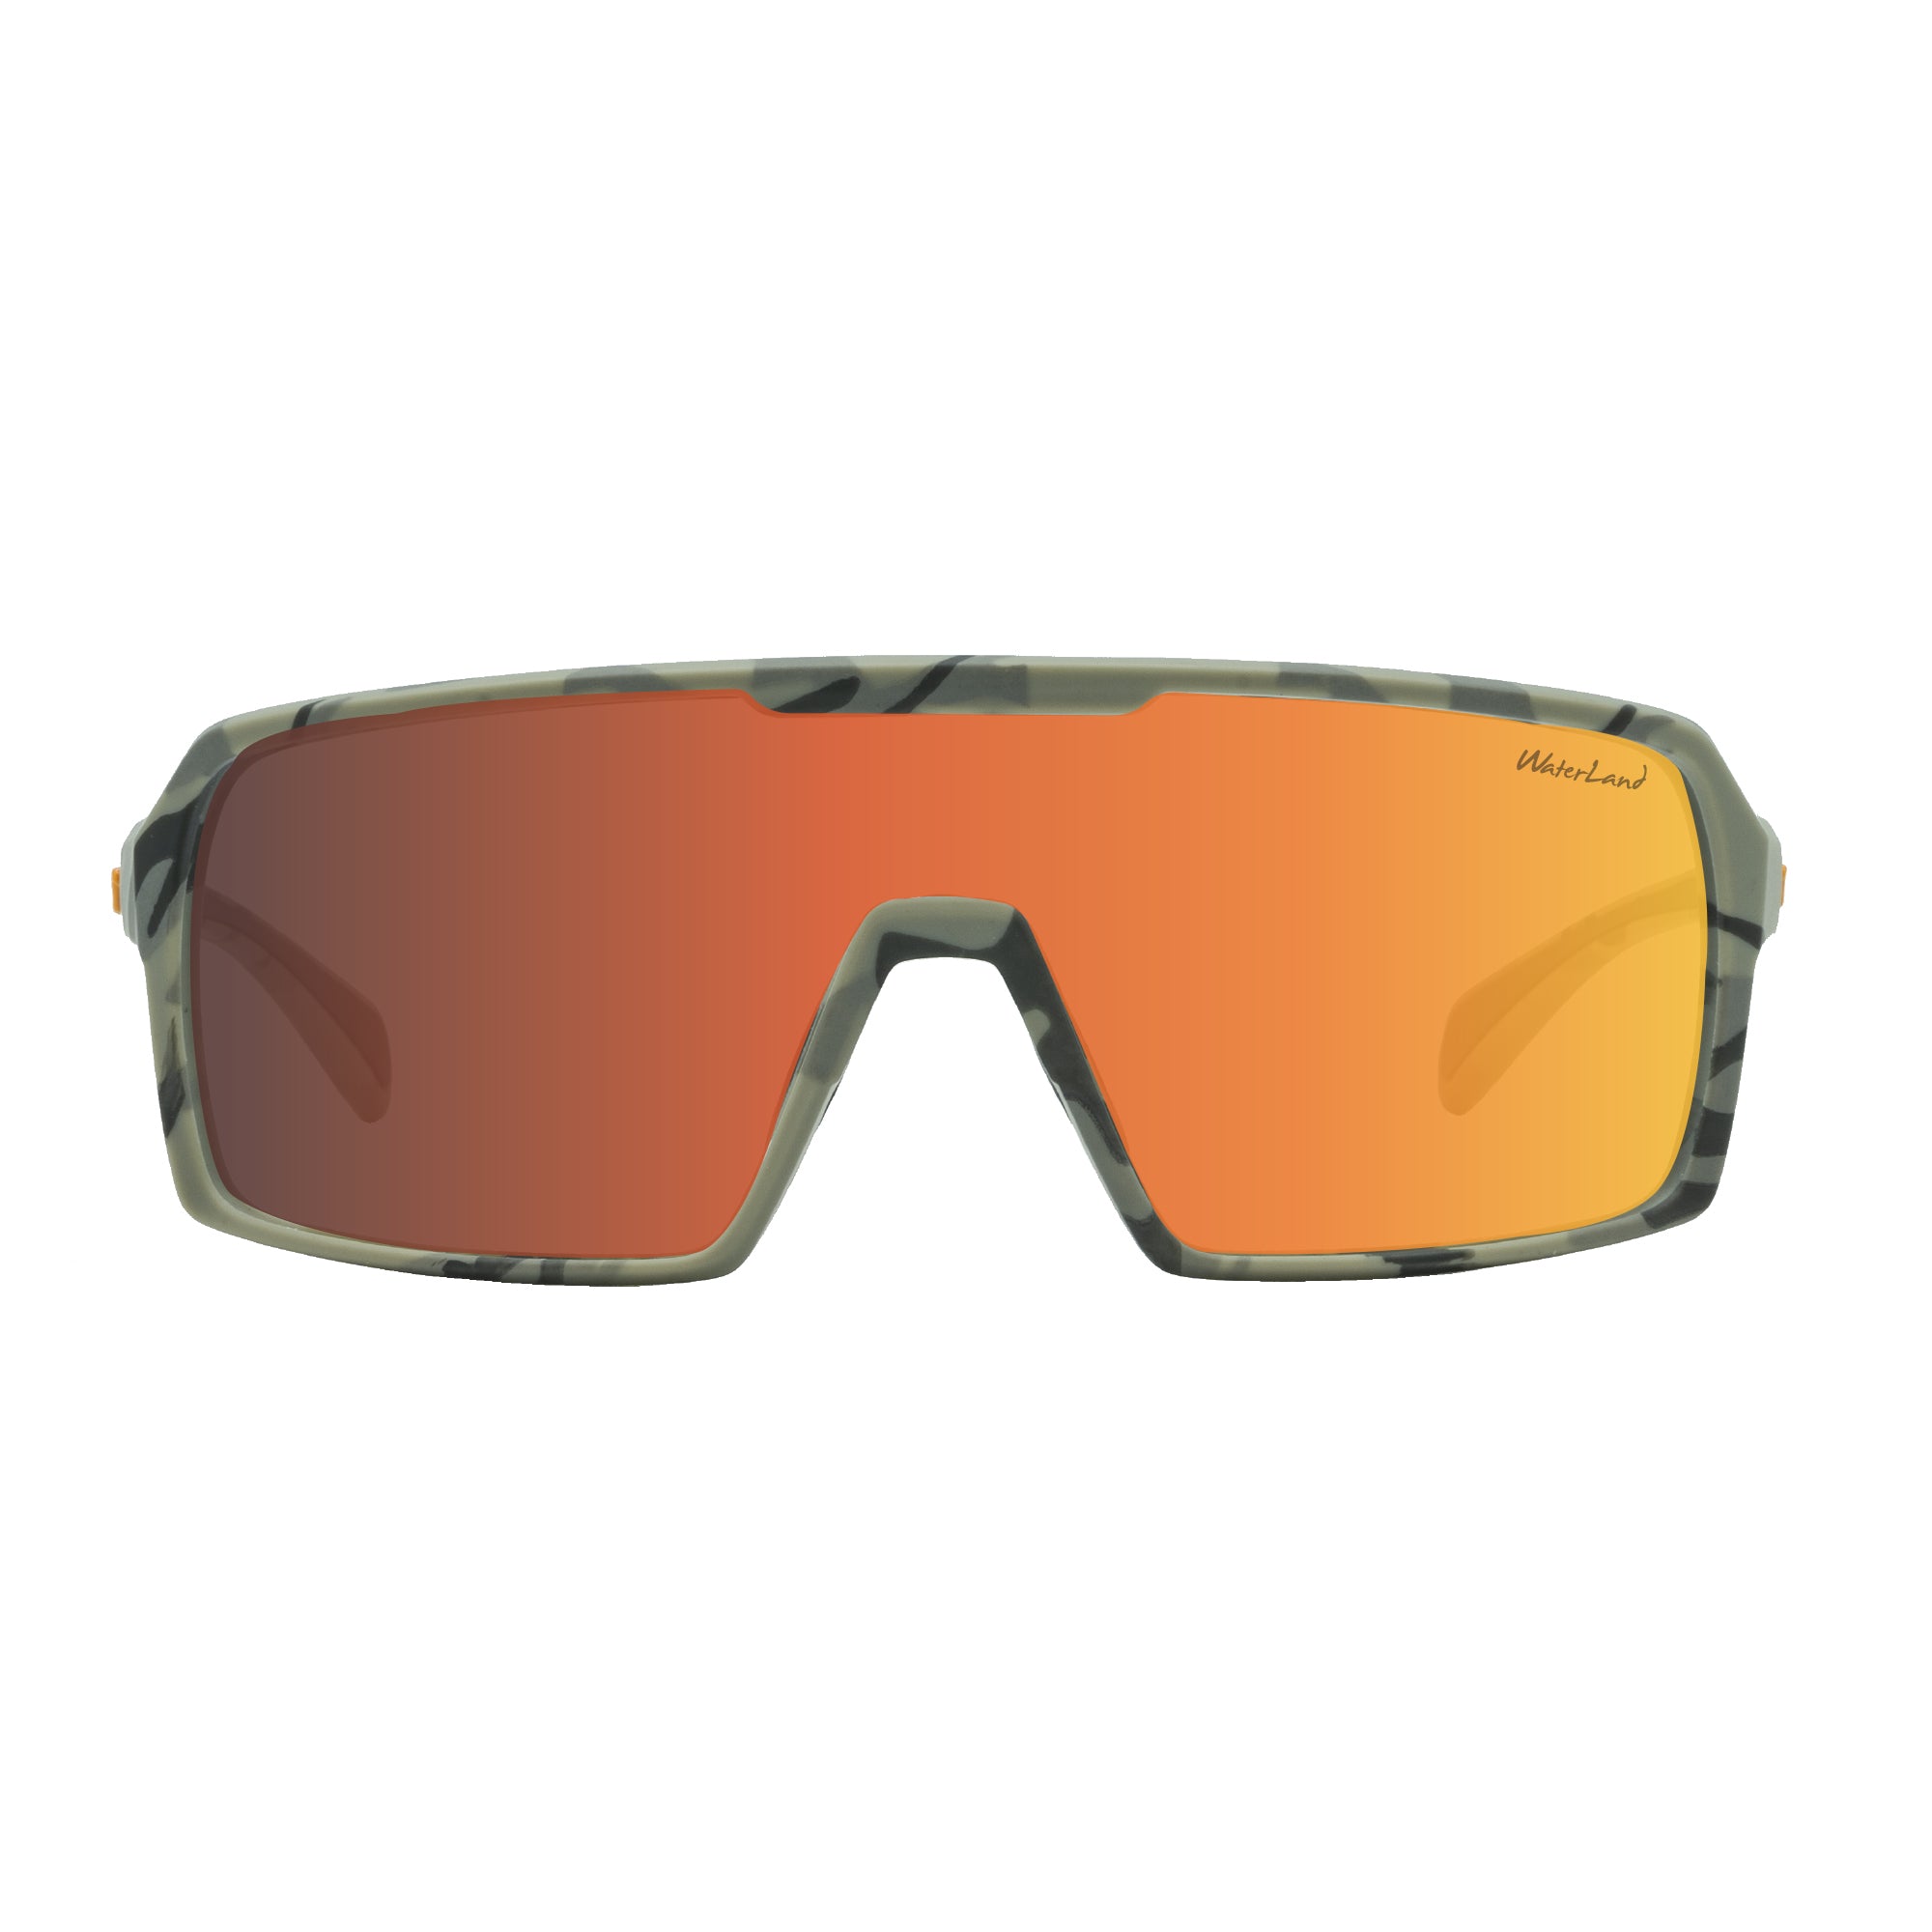 Waterland Polarized Sunglasses - Catchem - Ops Camo